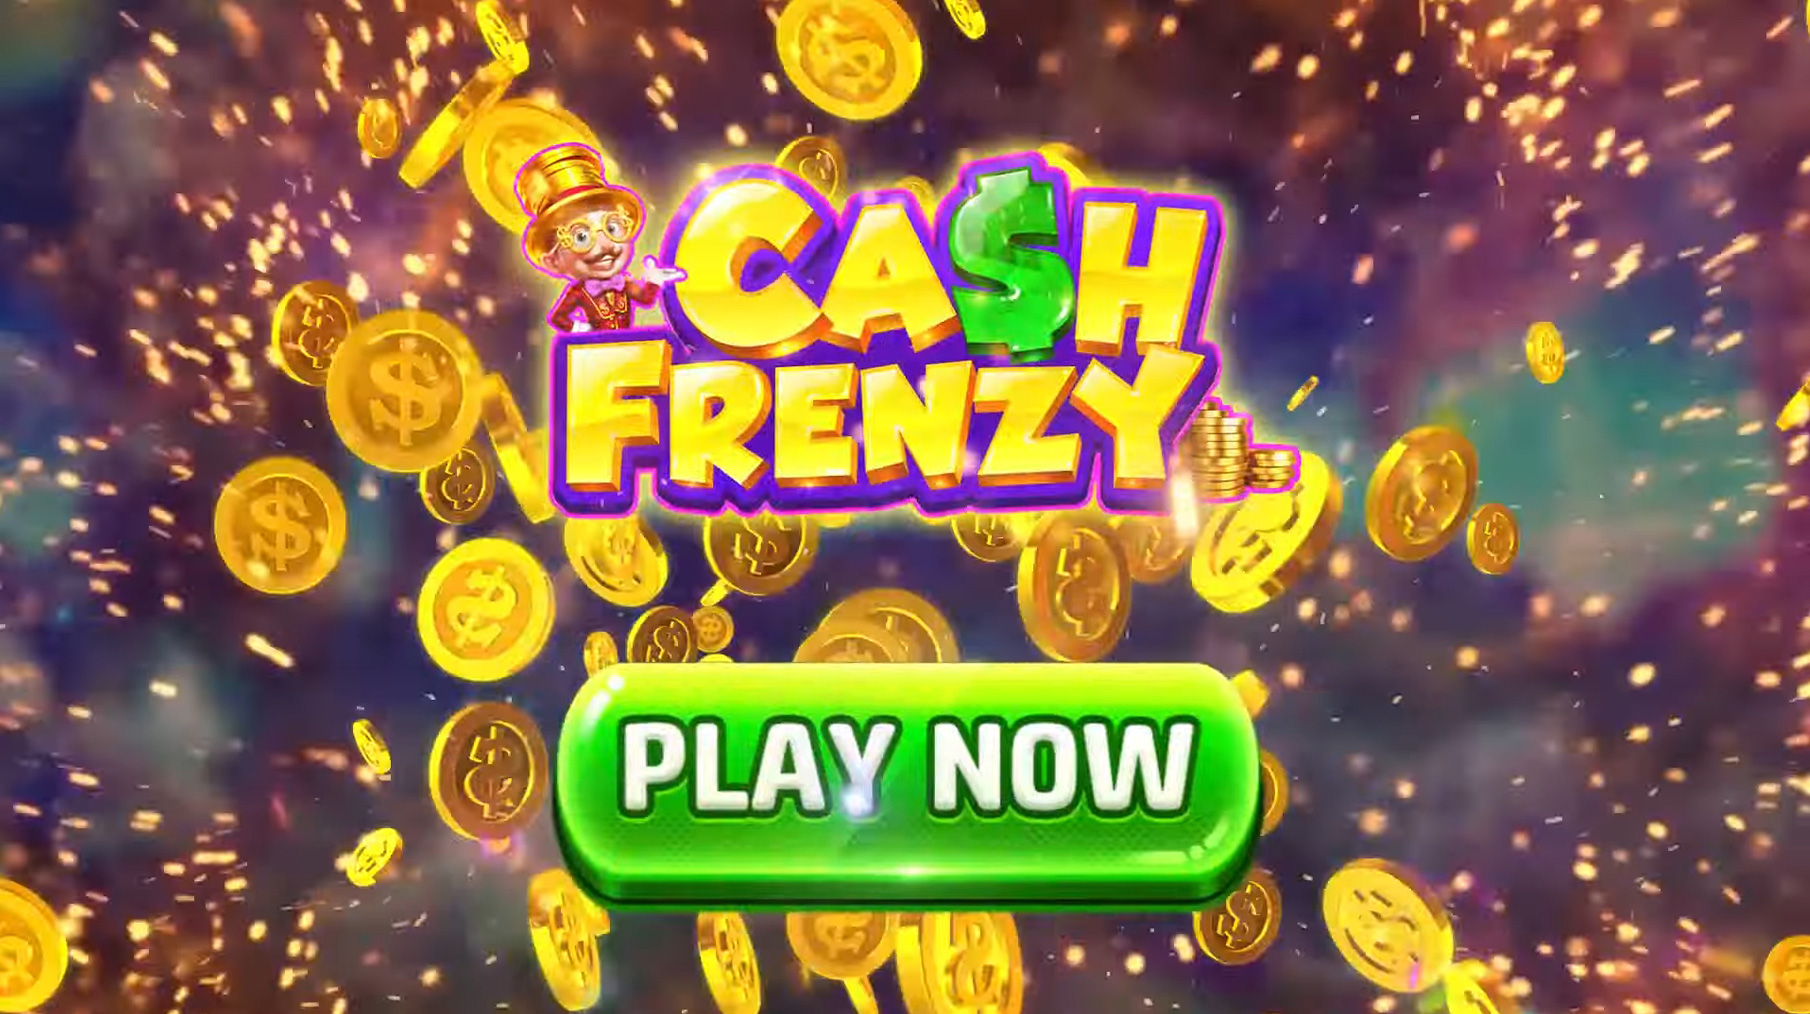 Monetization models for mobile games - Cash frenzy